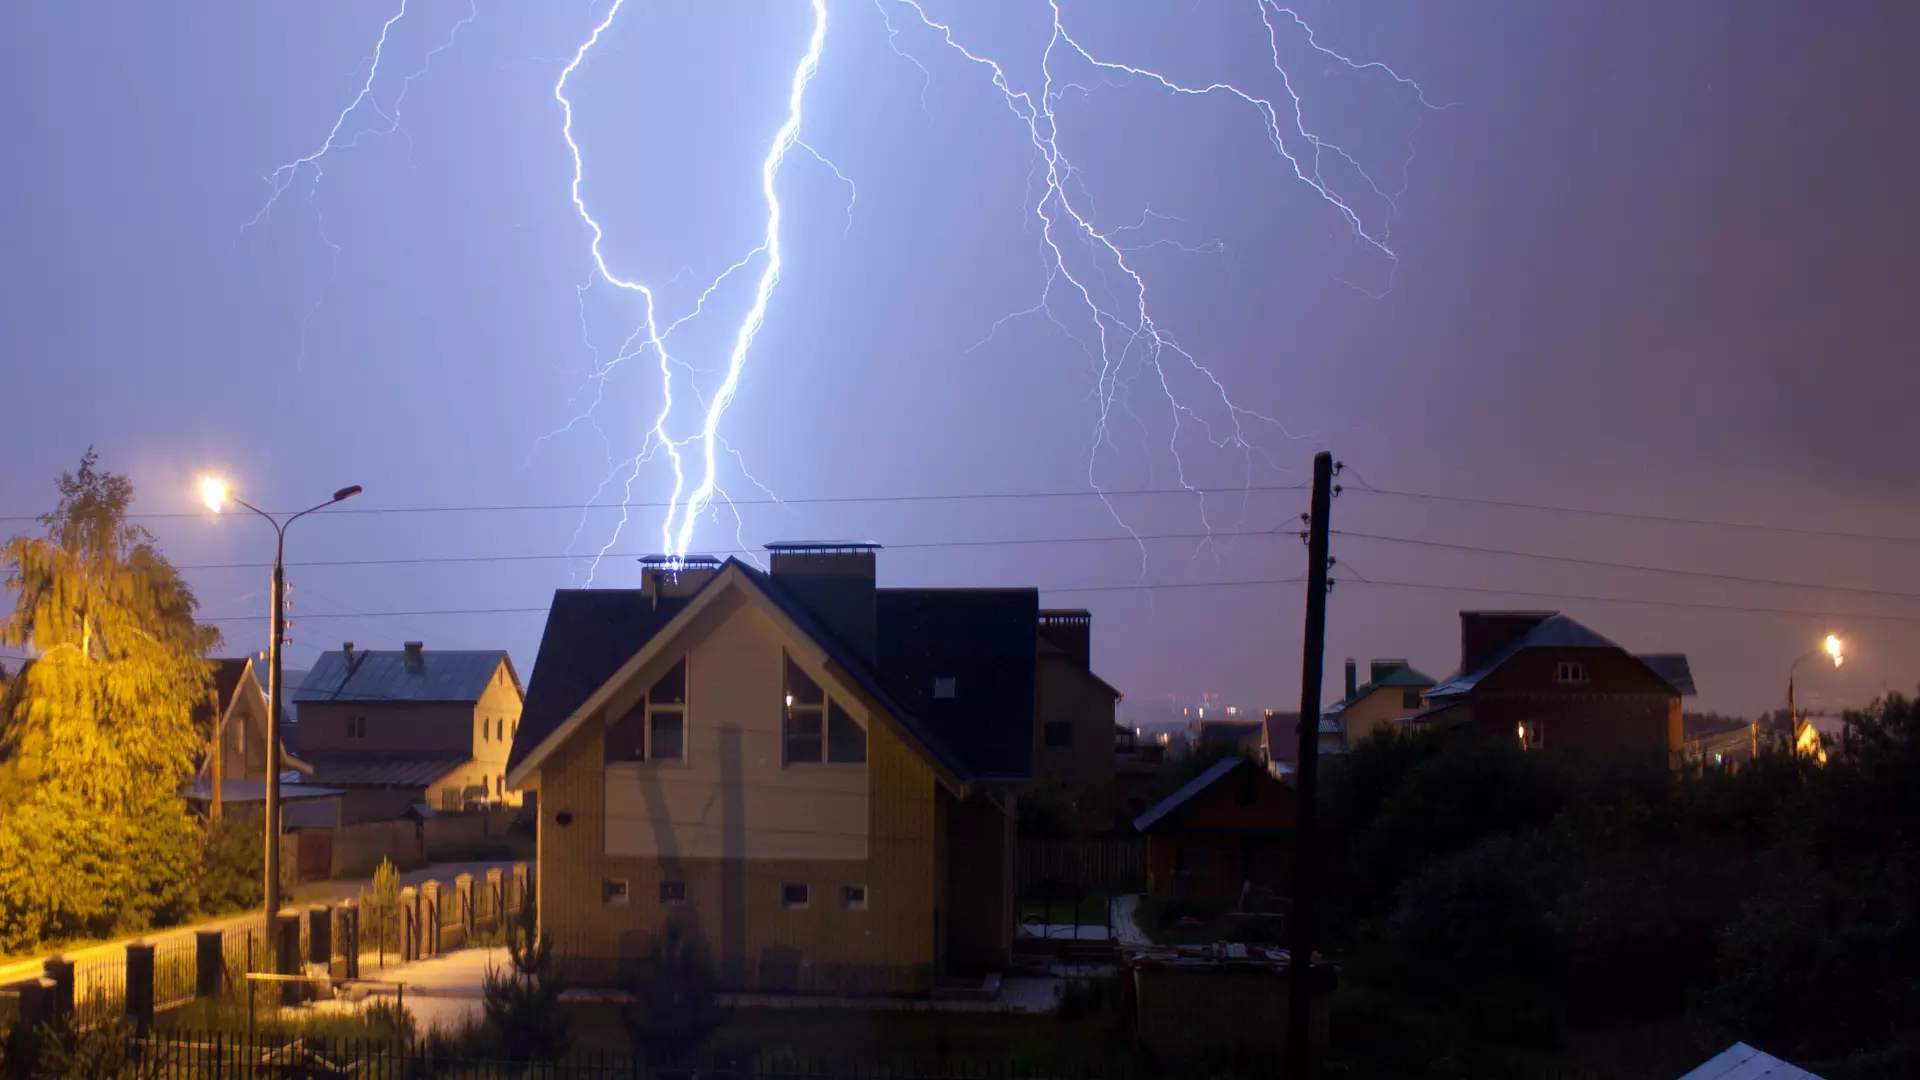 Lightning Striking Behind Home